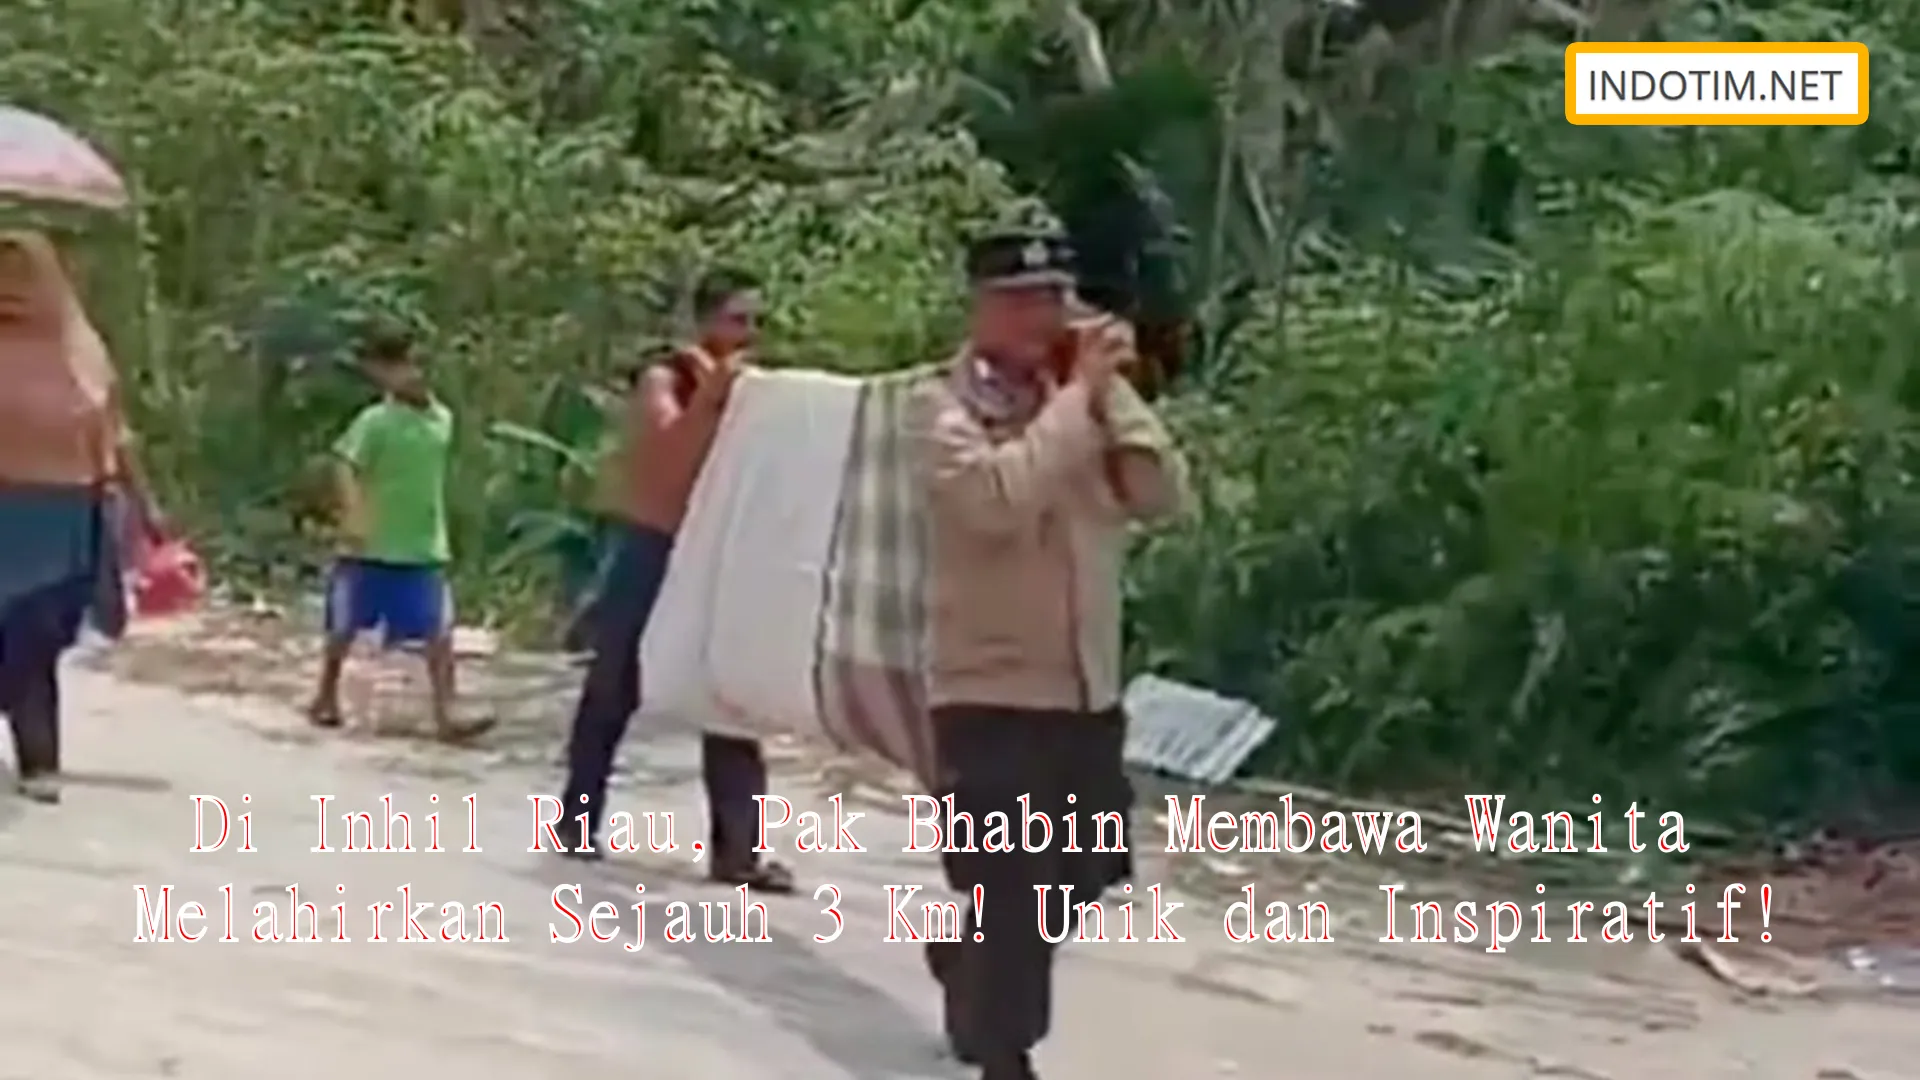 Di Inhil Riau, Pak Bhabin Membawa Wanita Melahirkan Sejauh 3 Km! Unik dan Inspiratif!